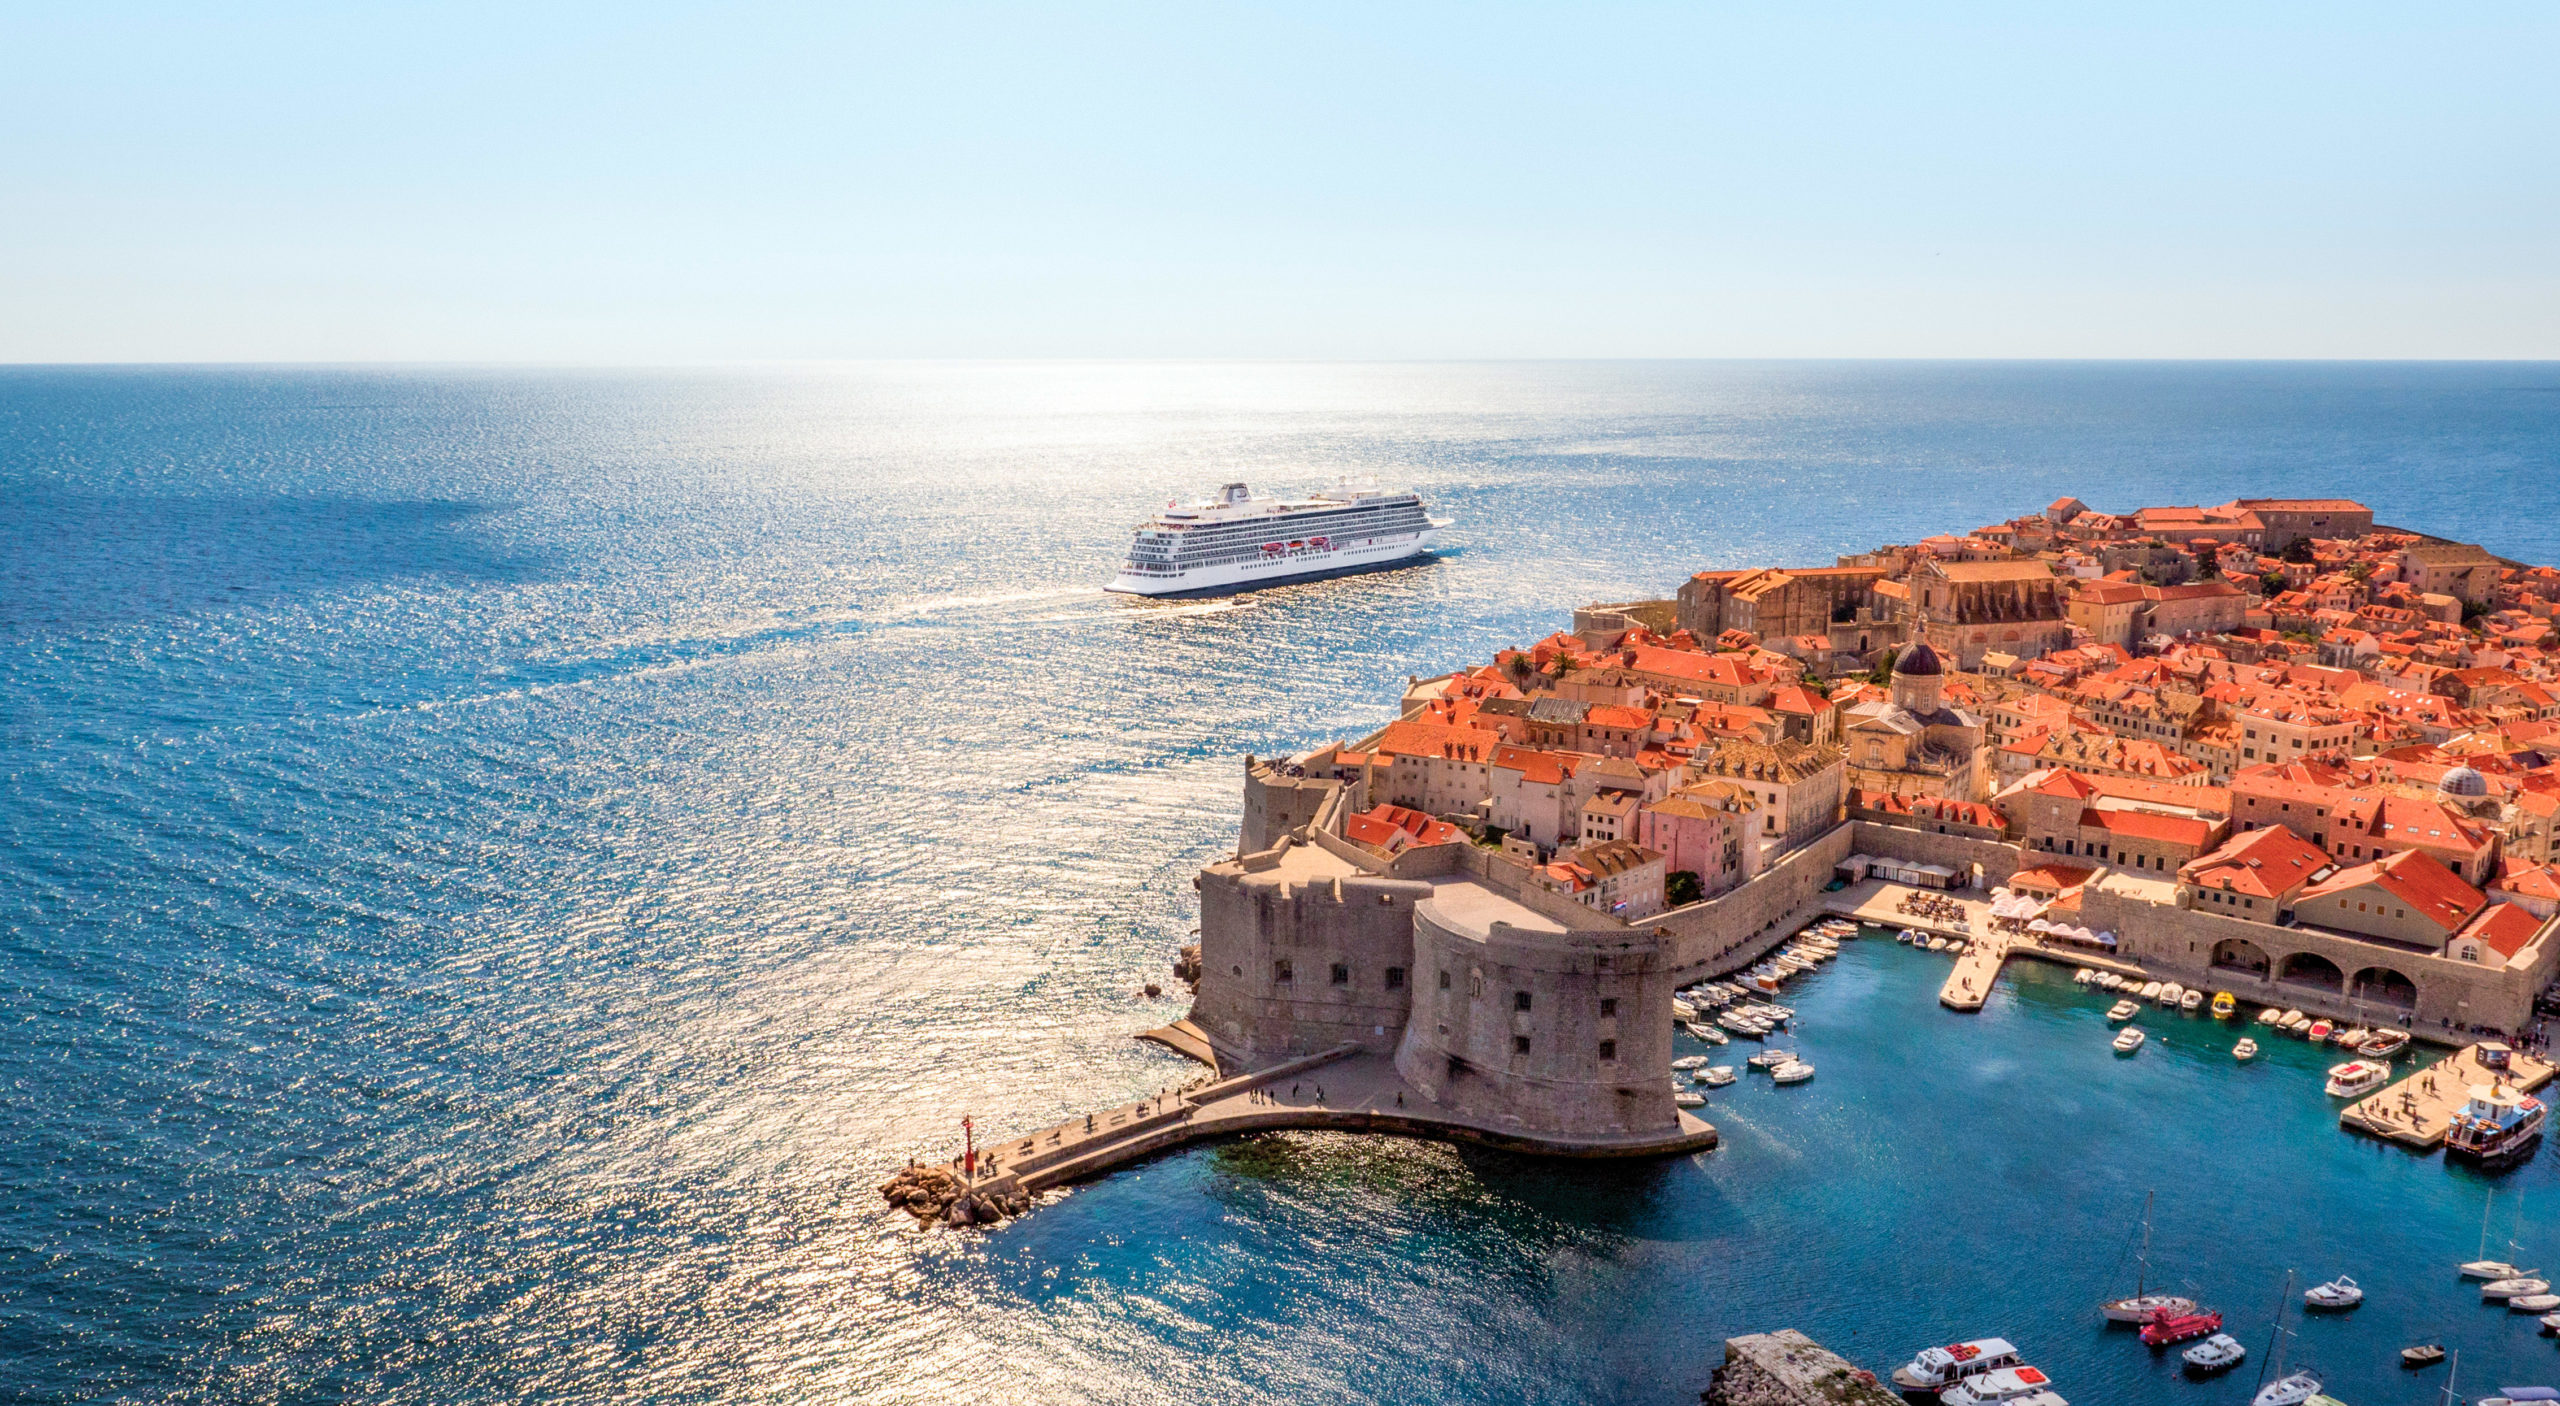 Aerial view of the Viking Sea leaving Dubrovnik, Croatia